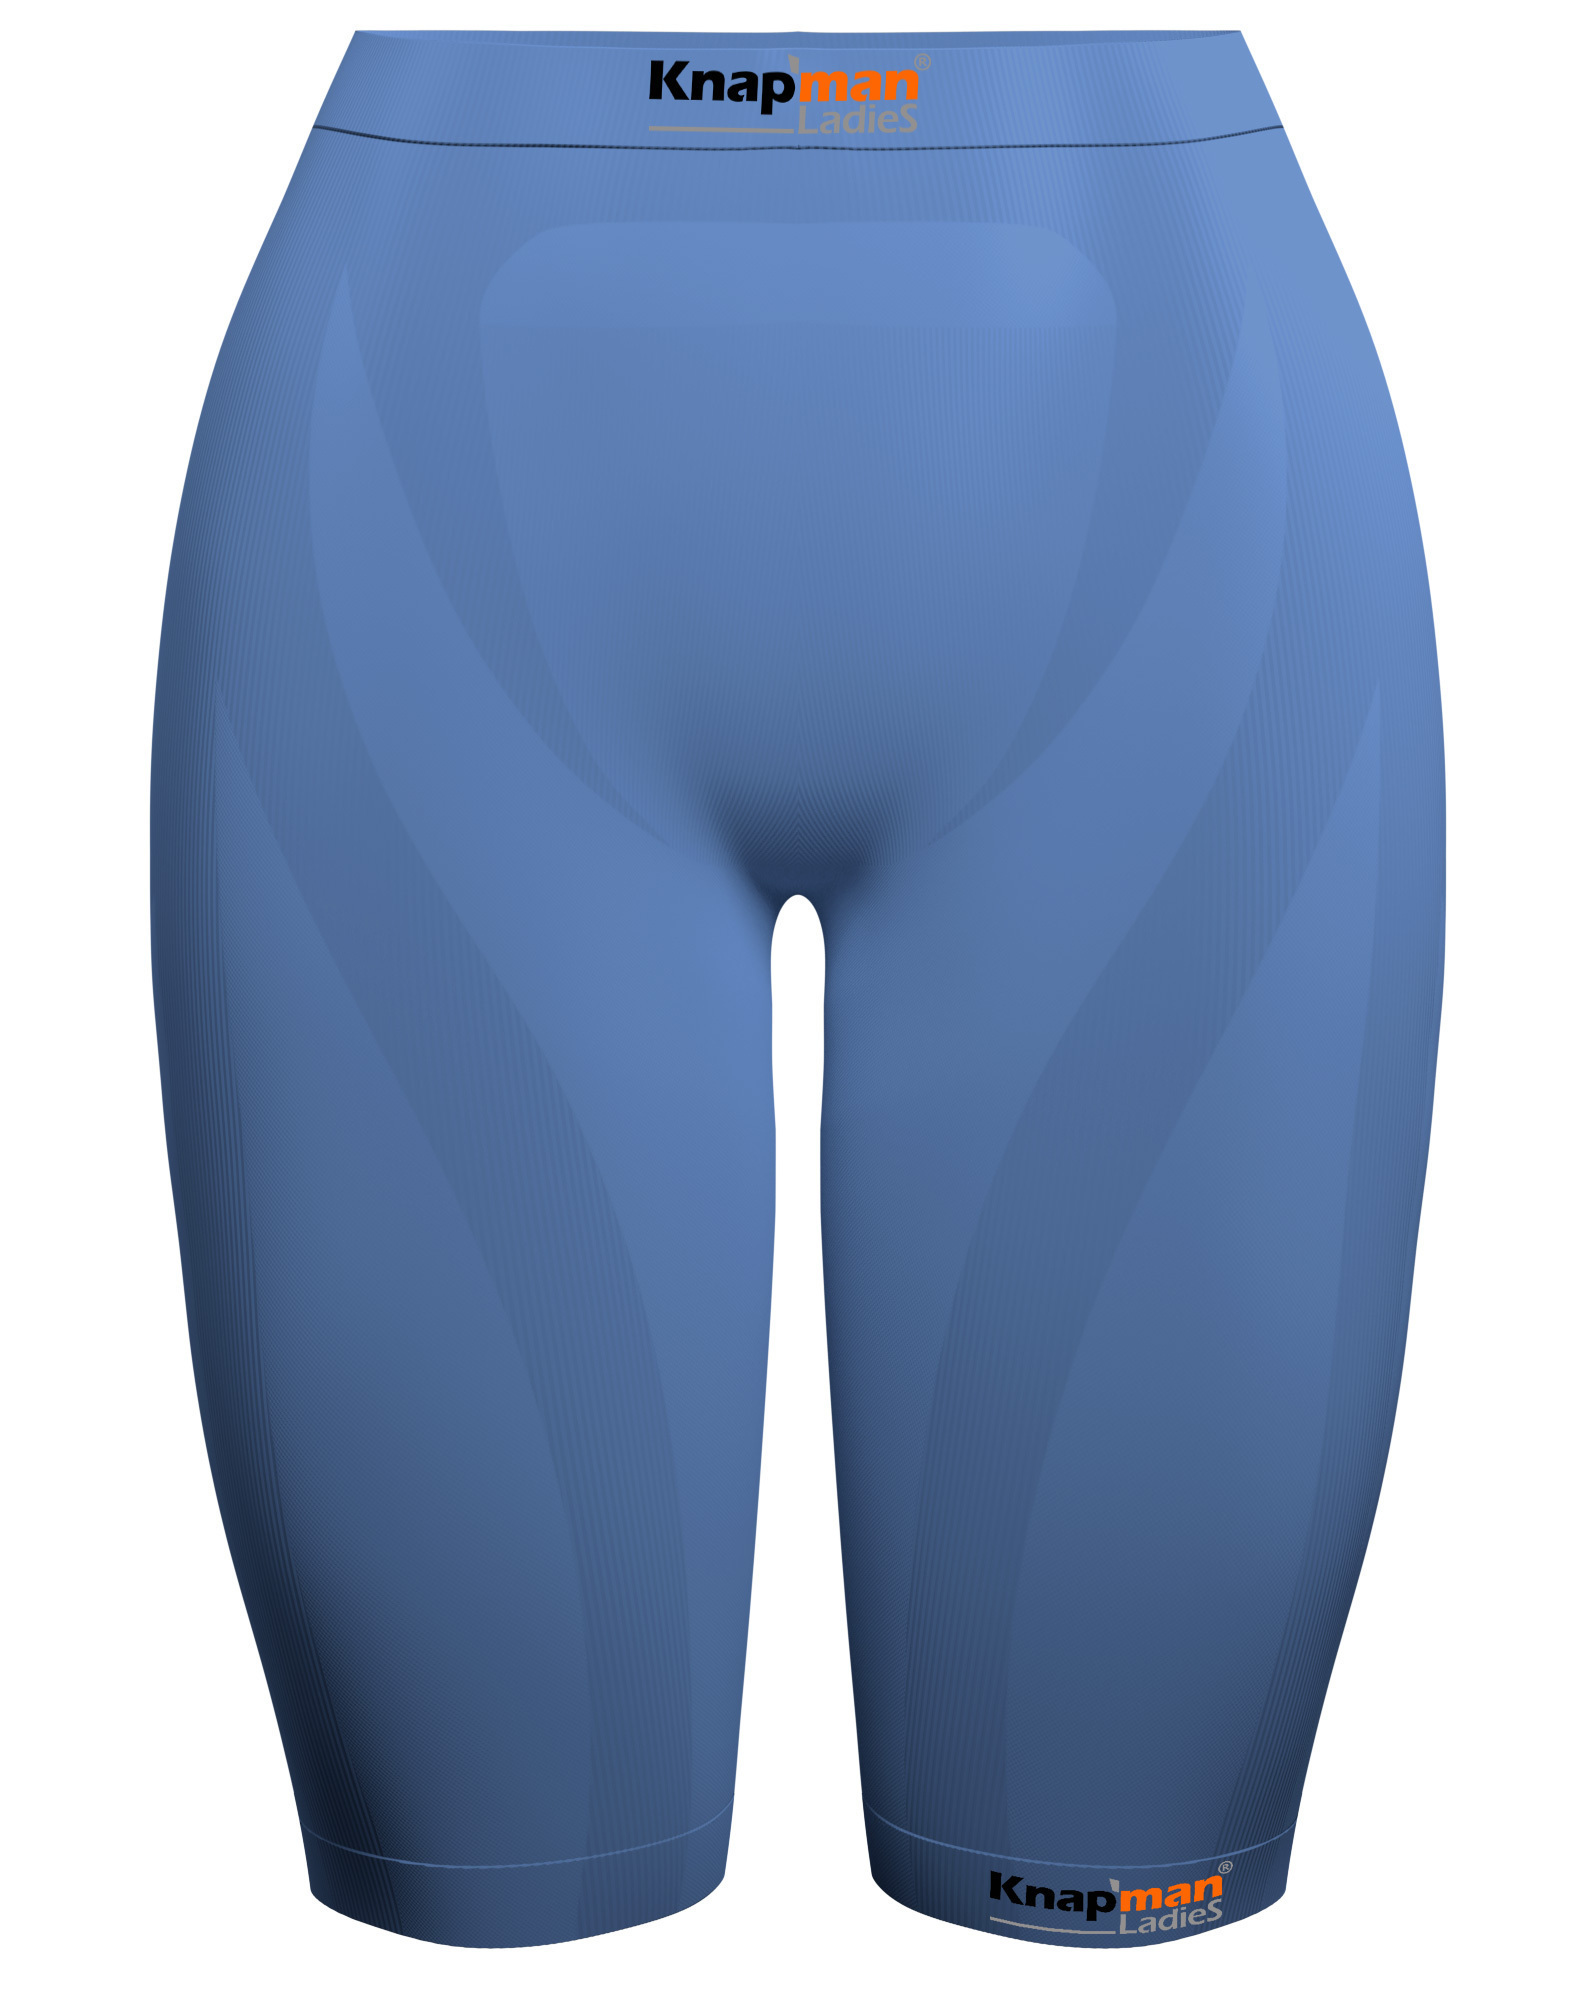 https://www.knapman.shop/product/108-large-knapman-womens-compression-shorts-light-blue-45.jpg